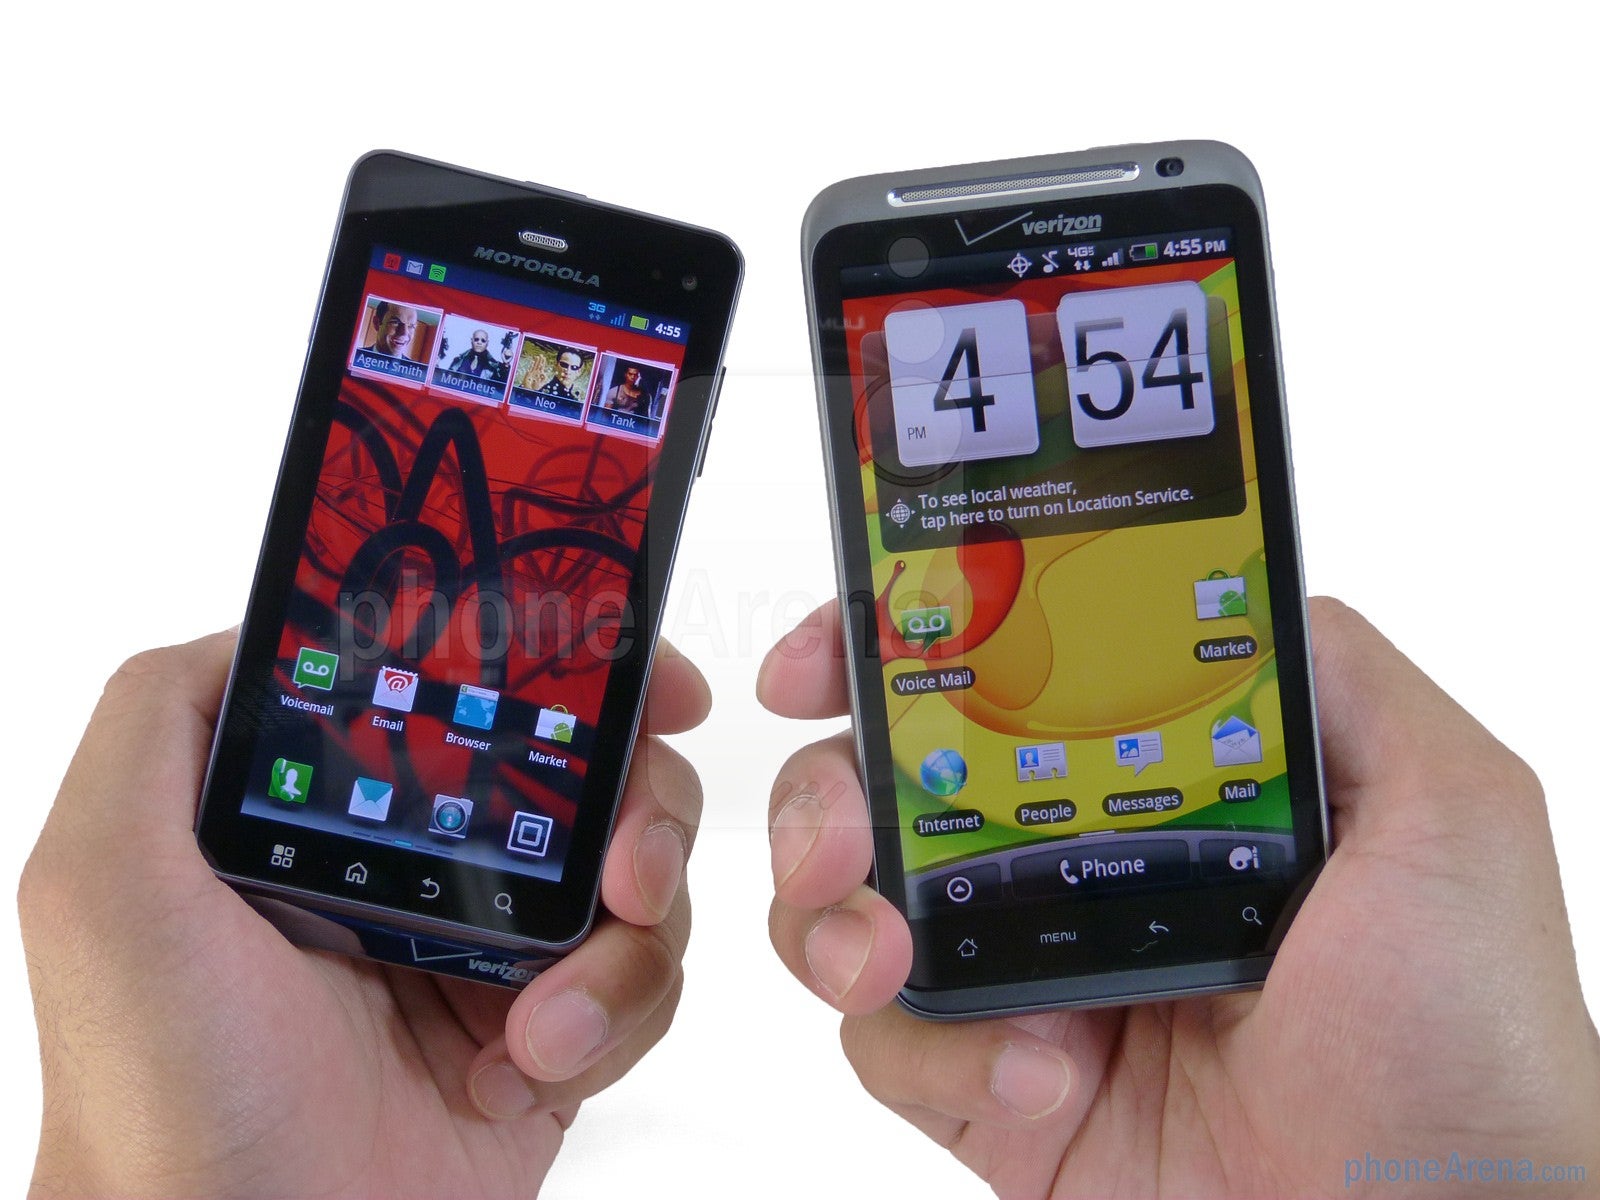 Motorola DROID 3 vs HTC ThunderBolt